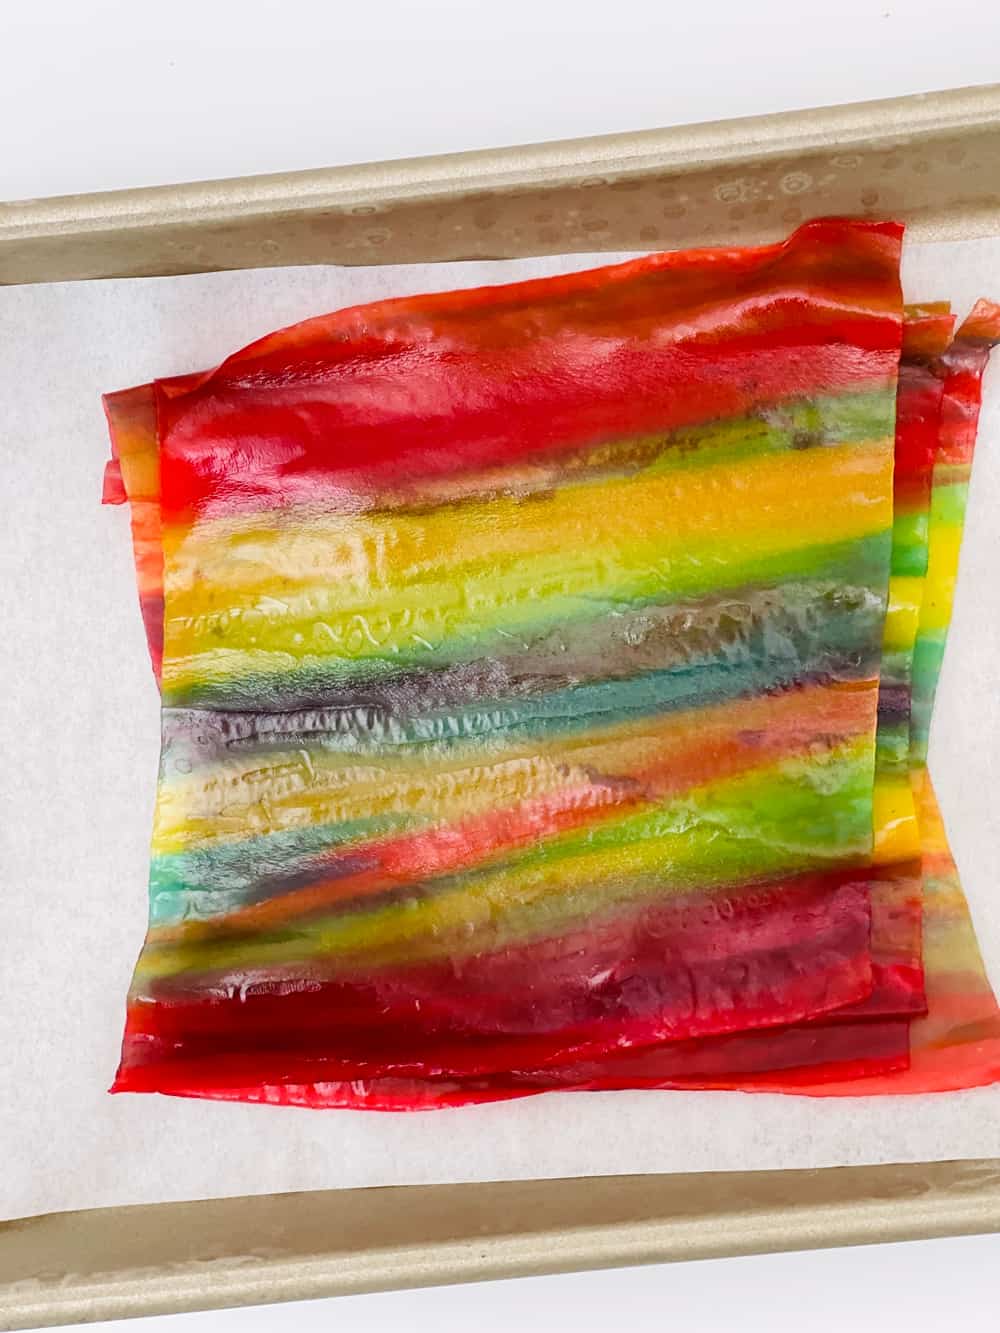 Best Rainbow Fruit Roll-Ups Recipe - How to Make Rainbow Fruit Roll-Ups